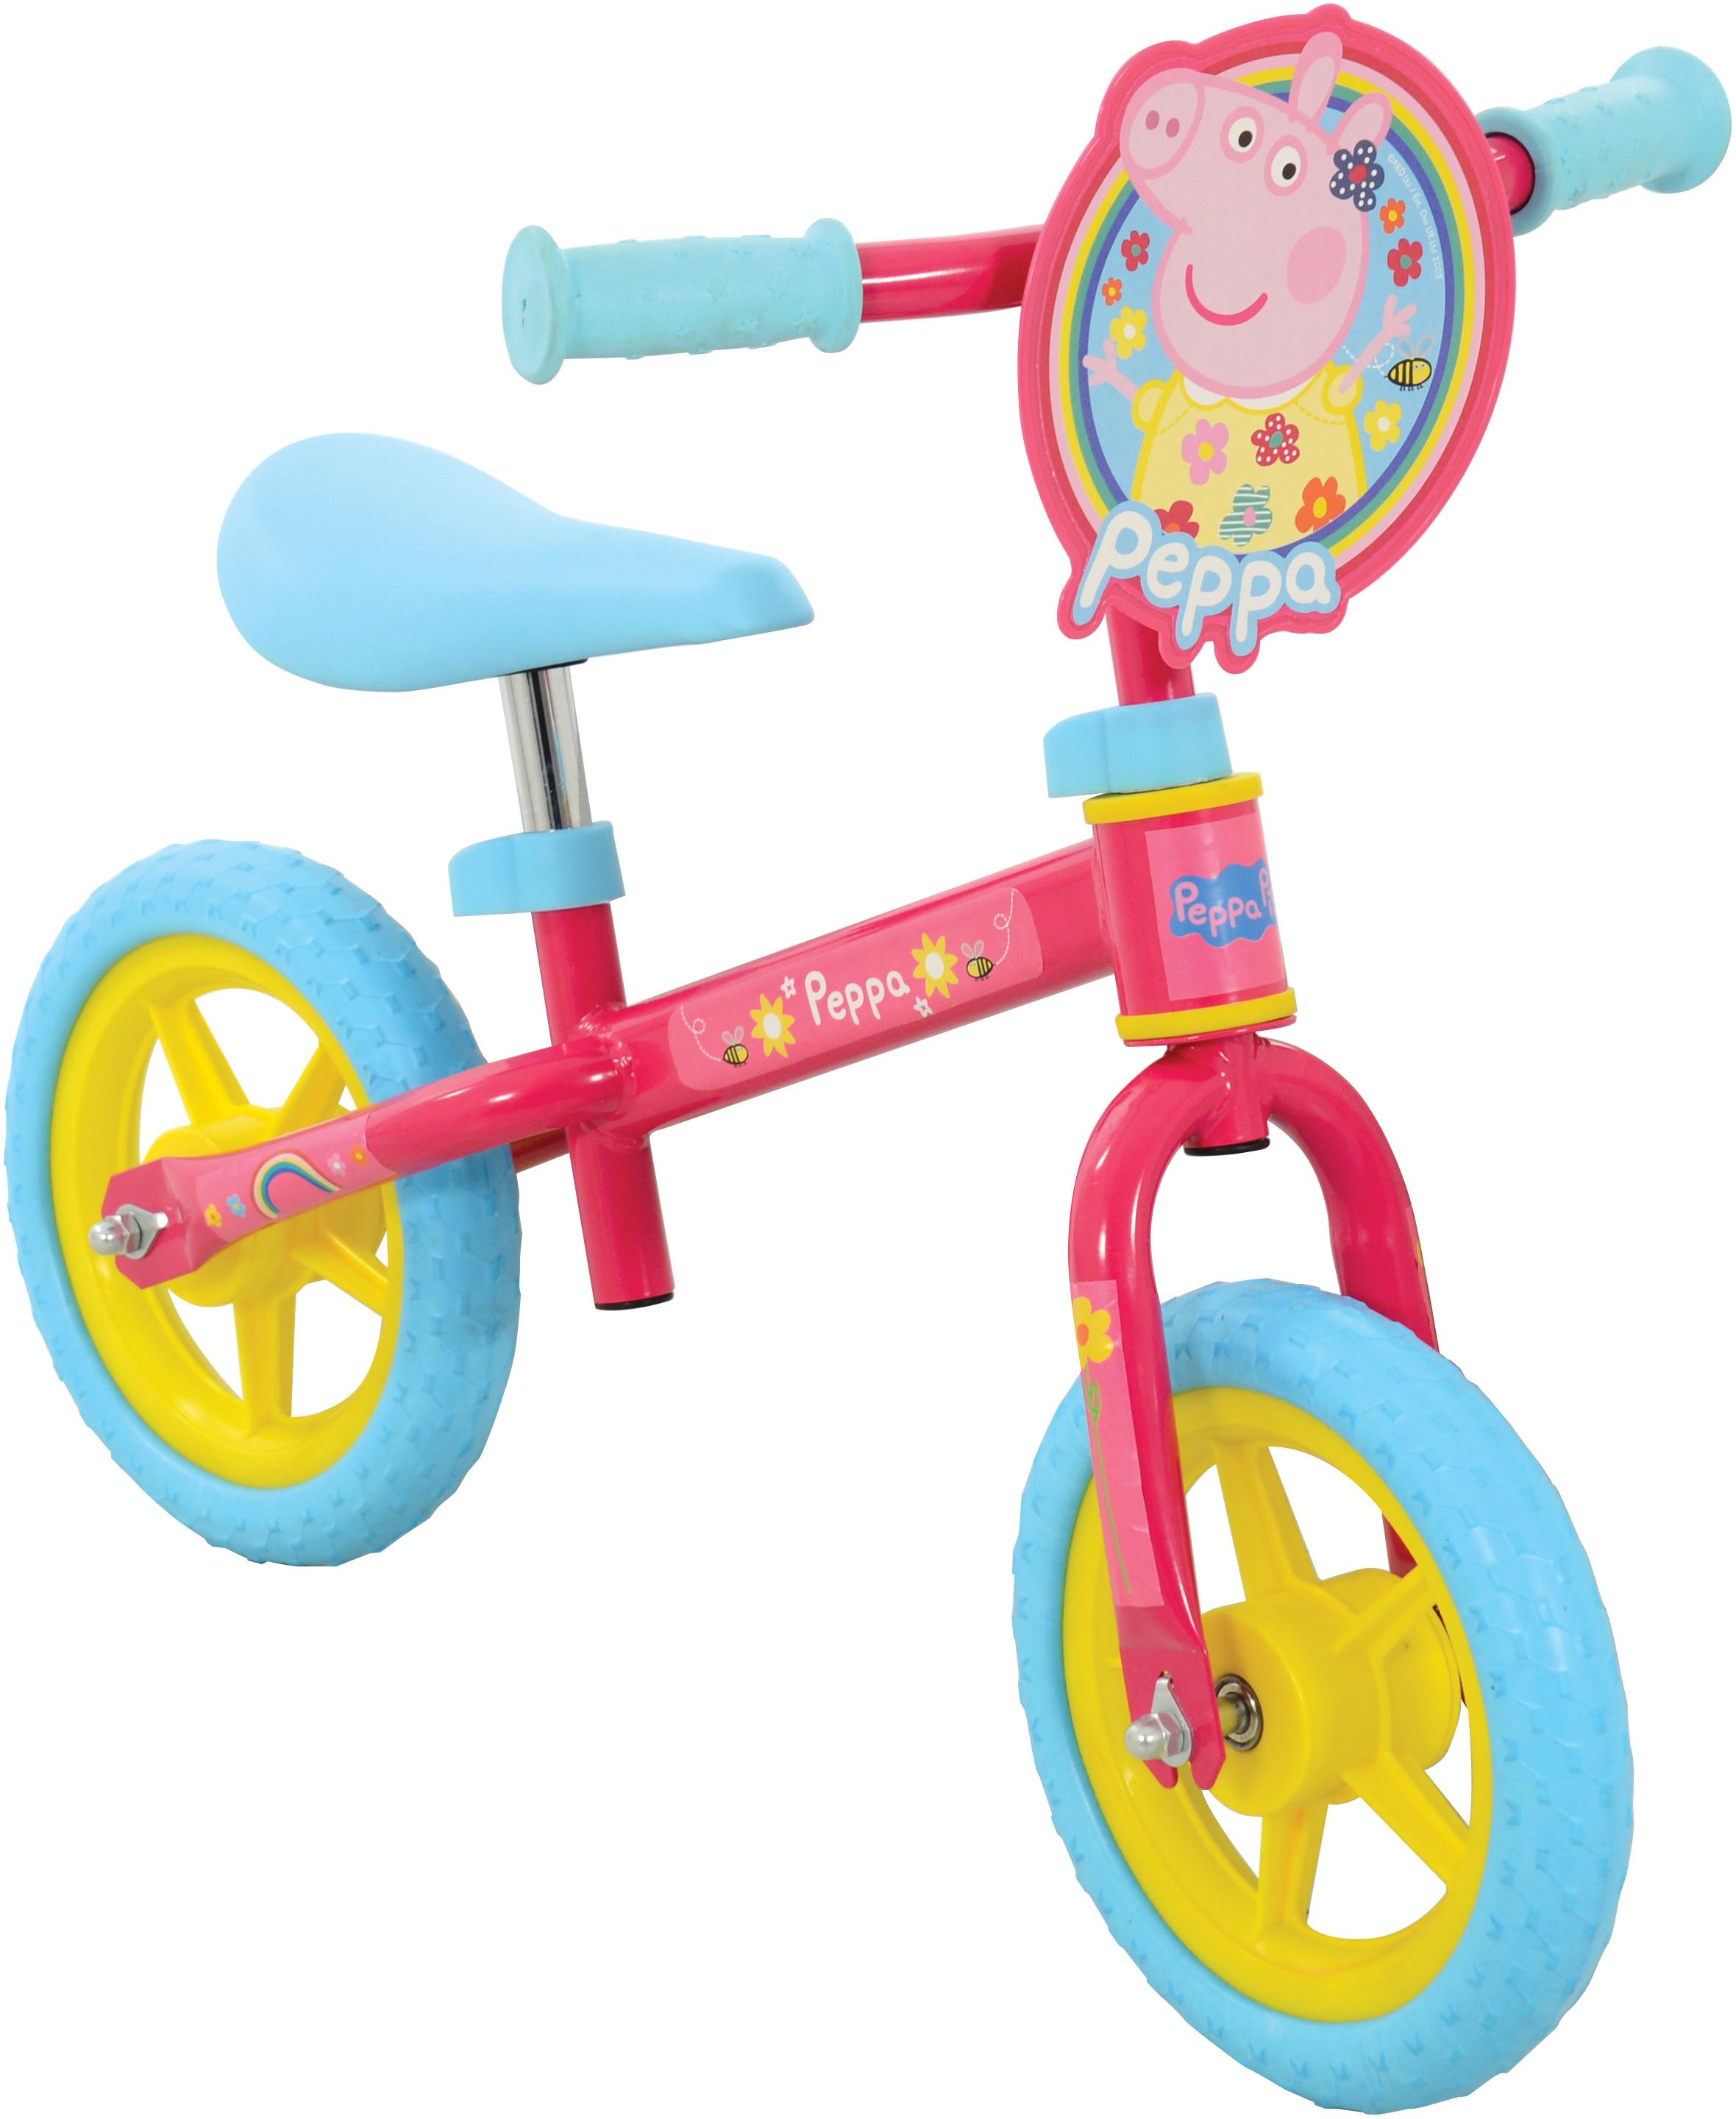 Peppa Pig Balance Bike - 10 Inch Wheel